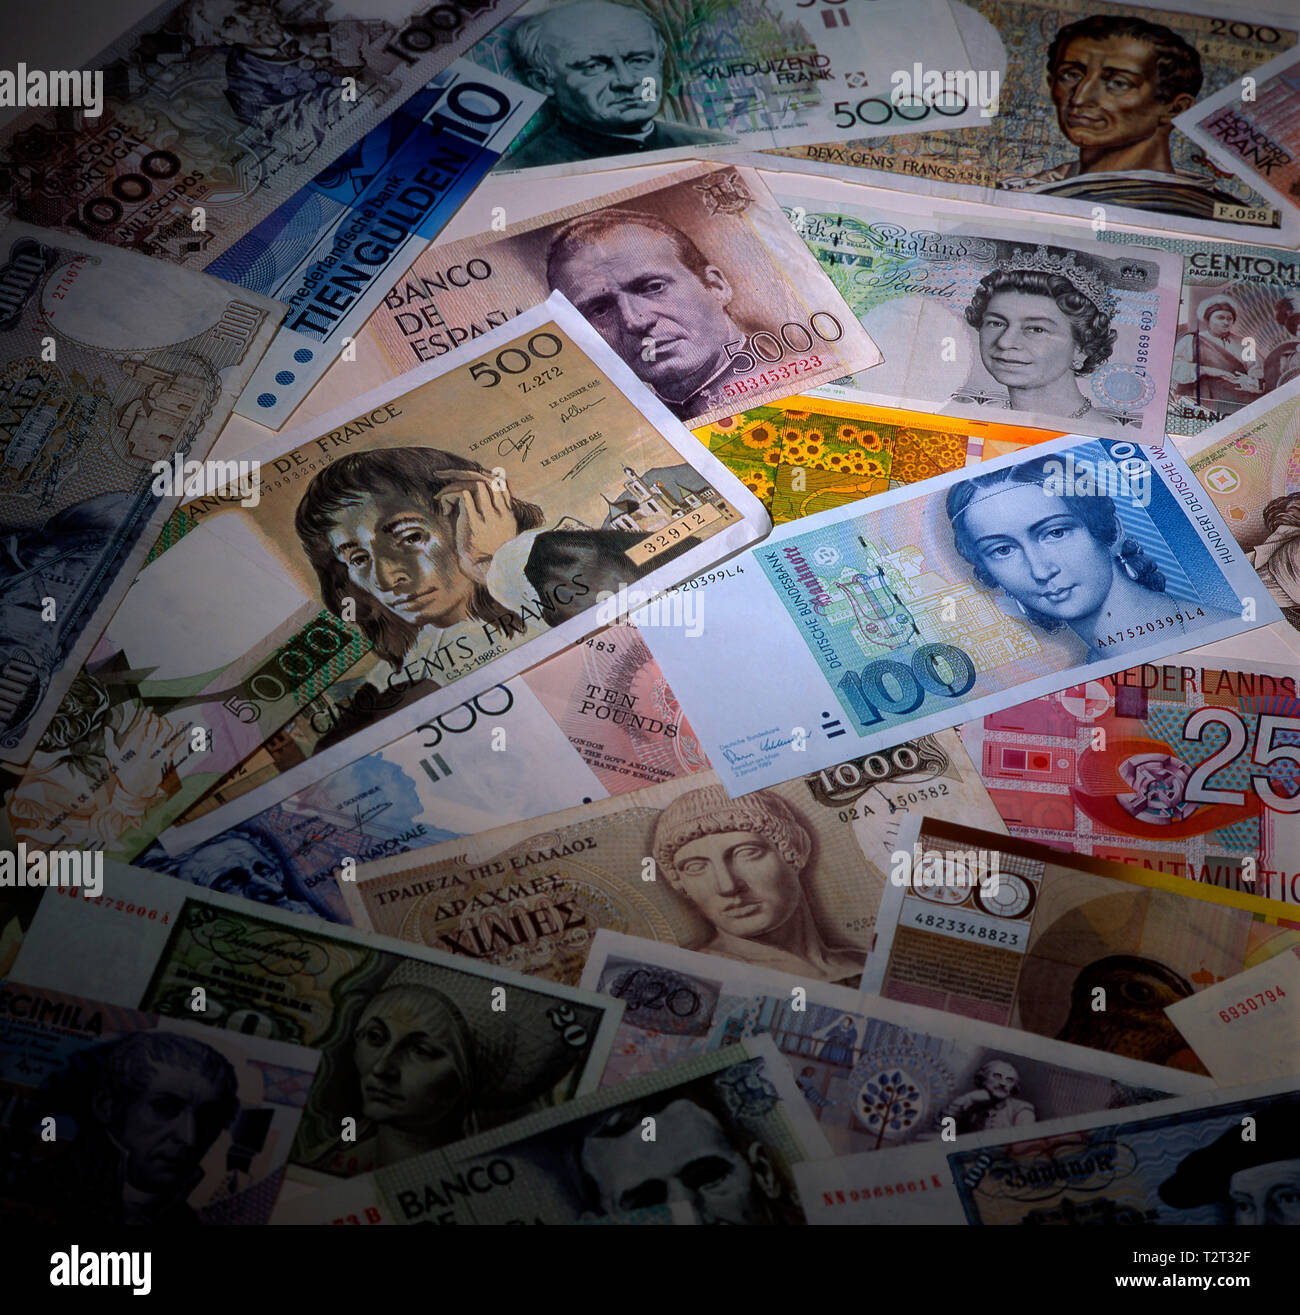 Heap of European banknotes Stock Photo